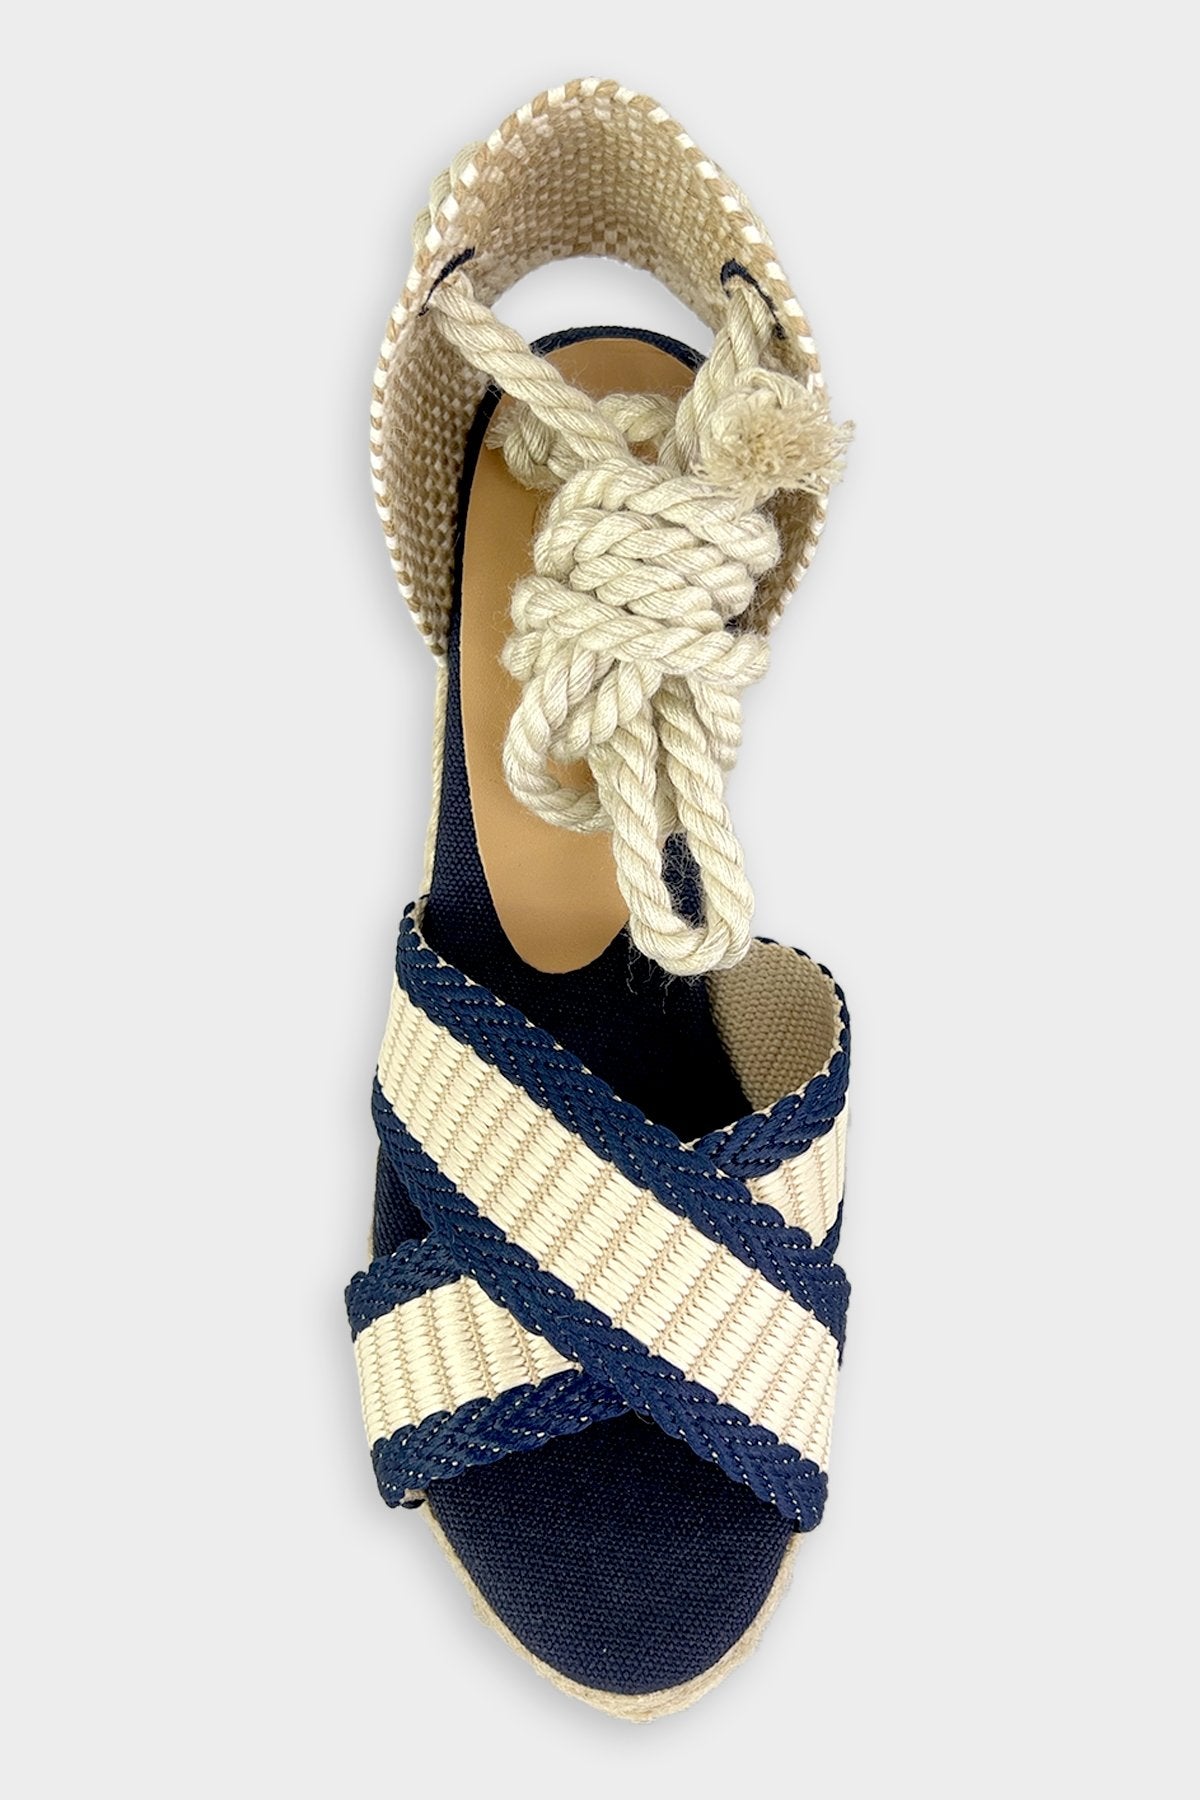 Belisa Ankle Wrap Wedge Sandal in Azul Marino/Crudo - shop-olivia.com